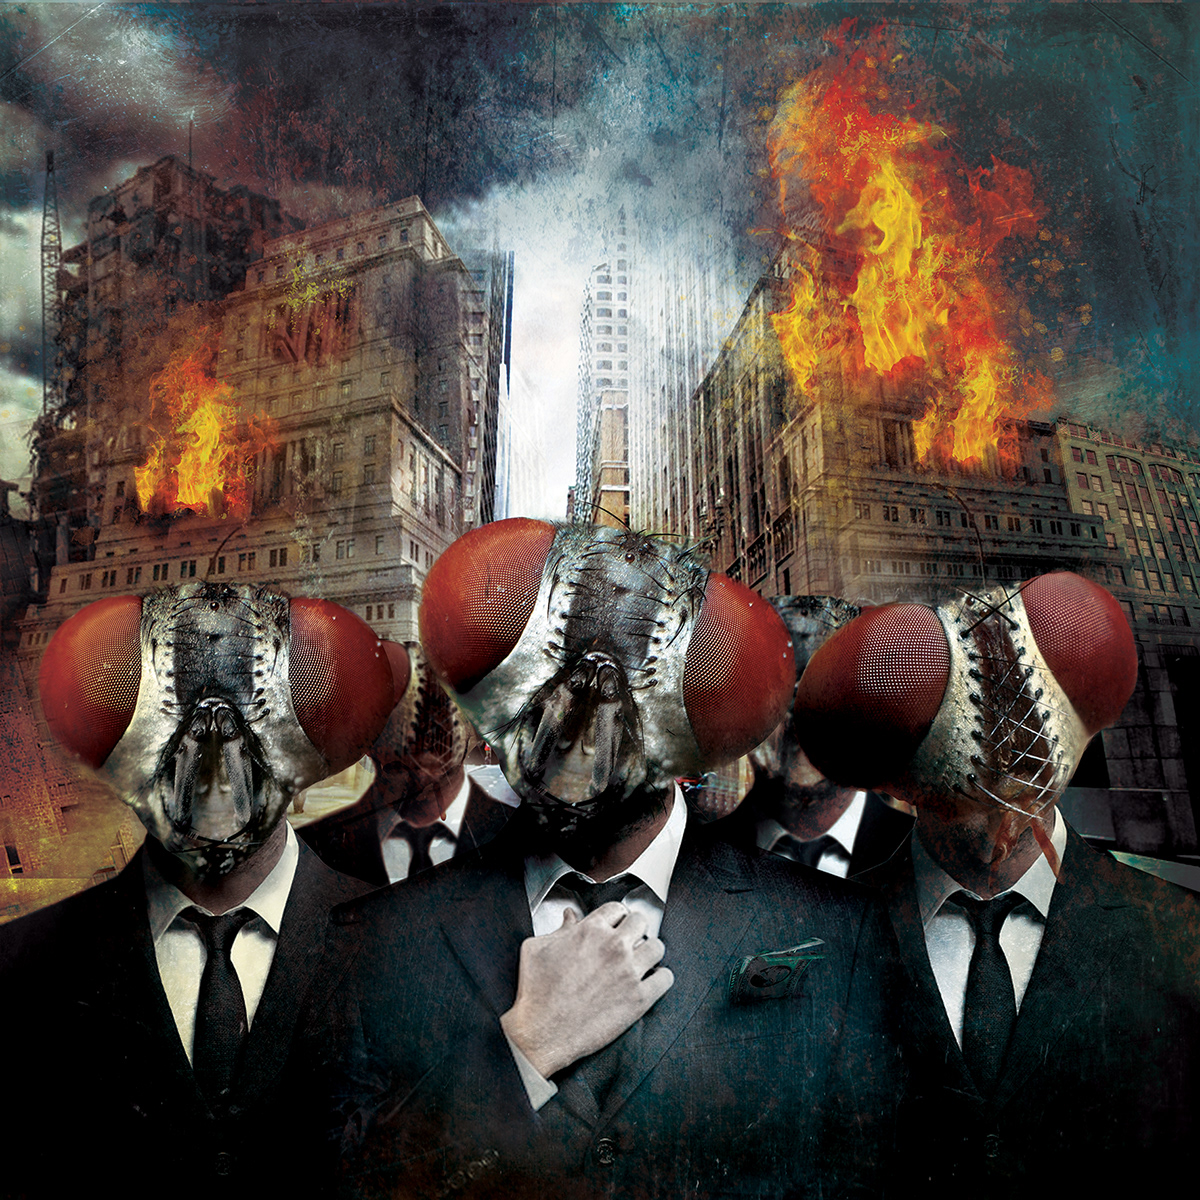 artwork leaders album cover poster design fire flame red Flies tie suit money dollar city